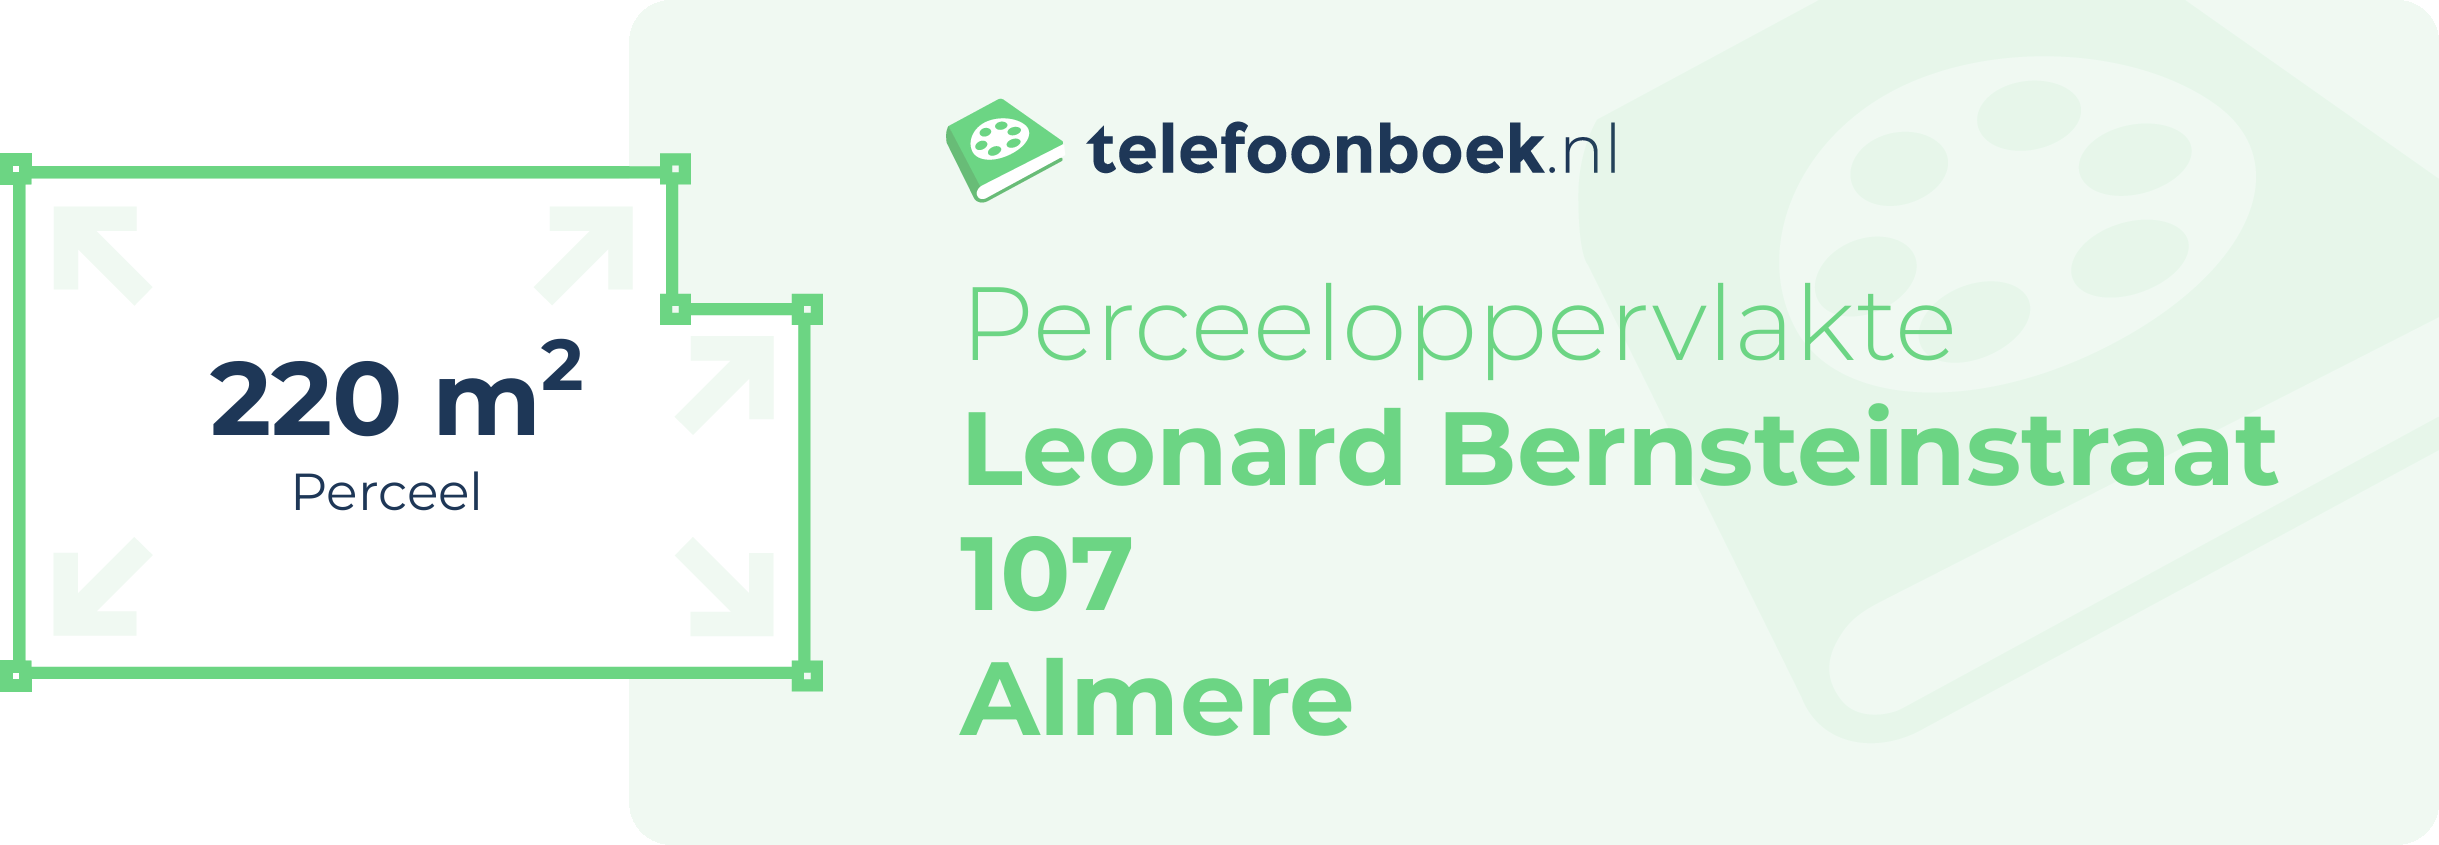 Perceeloppervlakte Leonard Bernsteinstraat 107 Almere